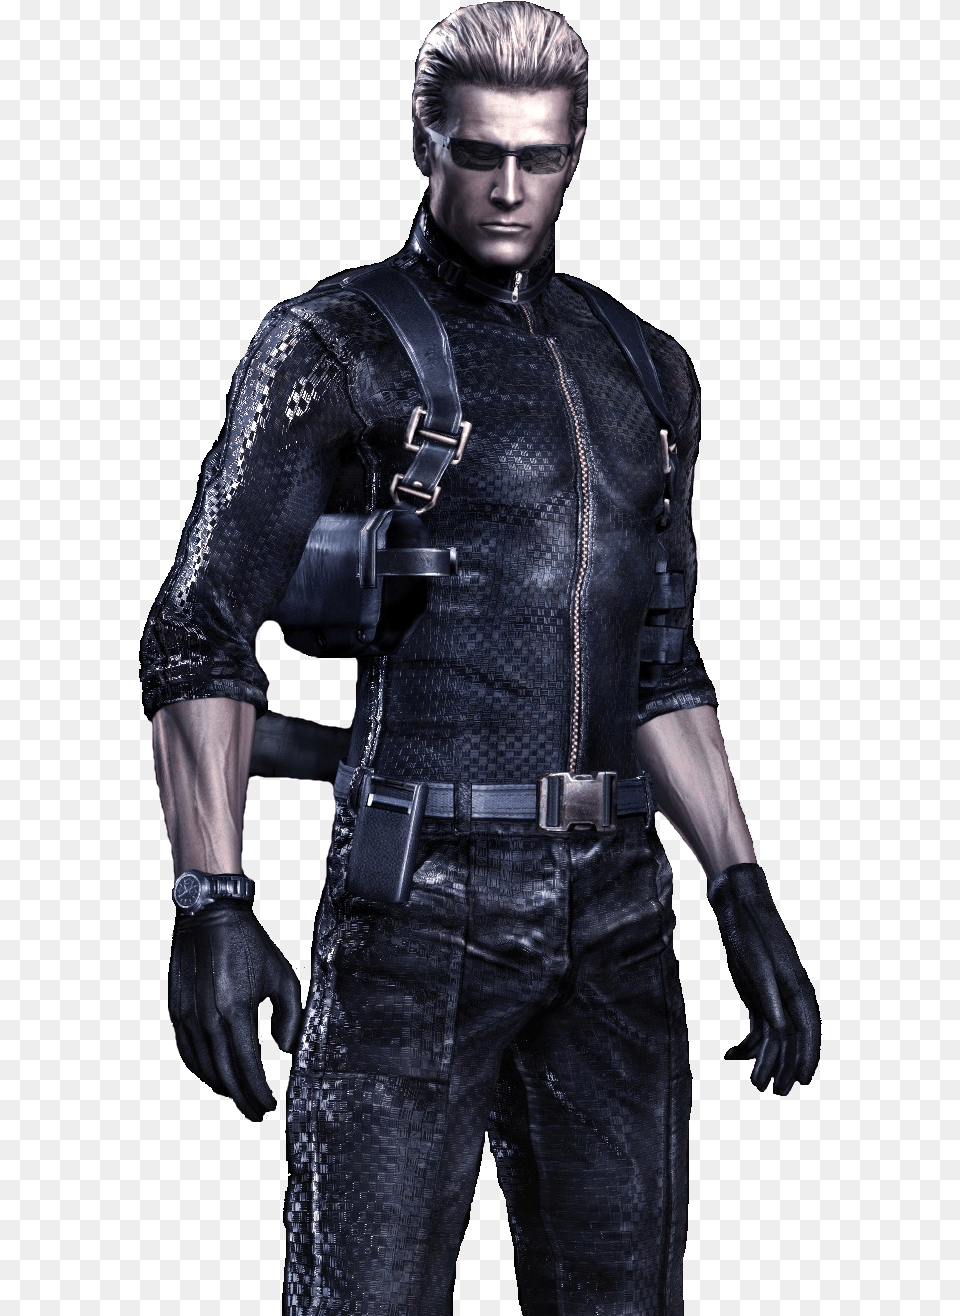 Chris Redfield Resident Evil 5 Jikl, Clothing, Coat, Jacket, Accessories Free Png